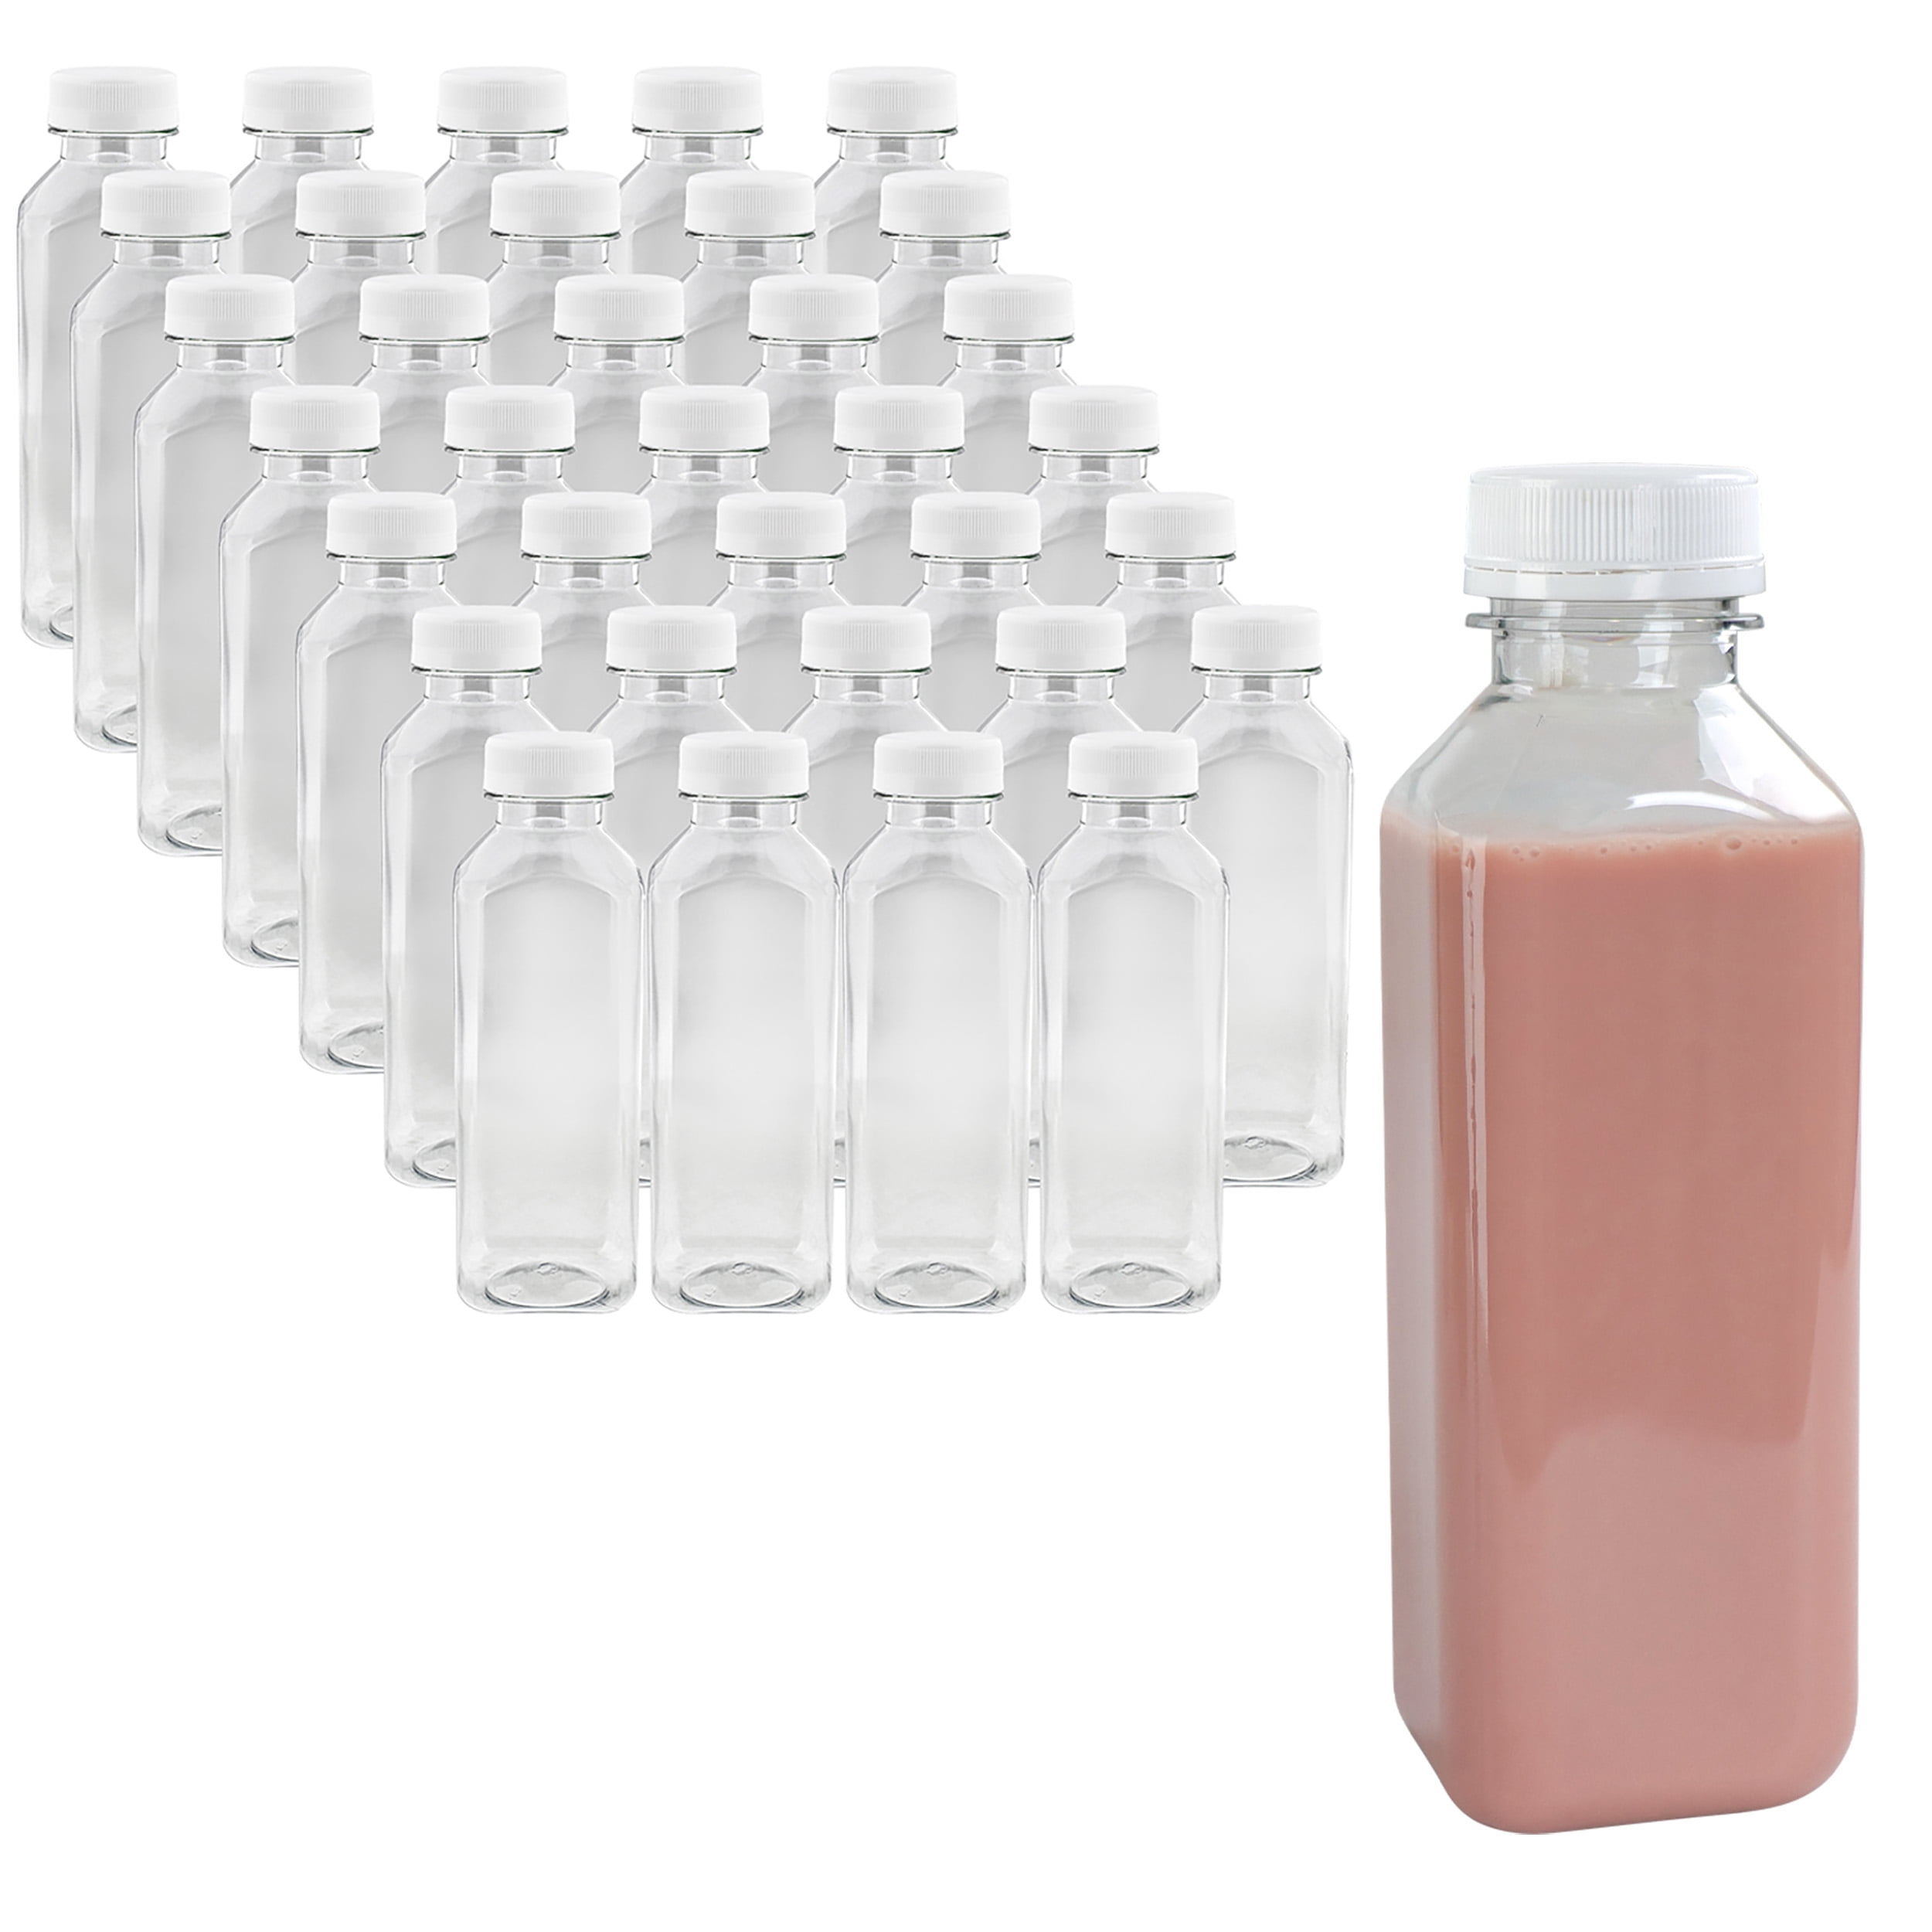 16 oz. Plastic Juice Bottles